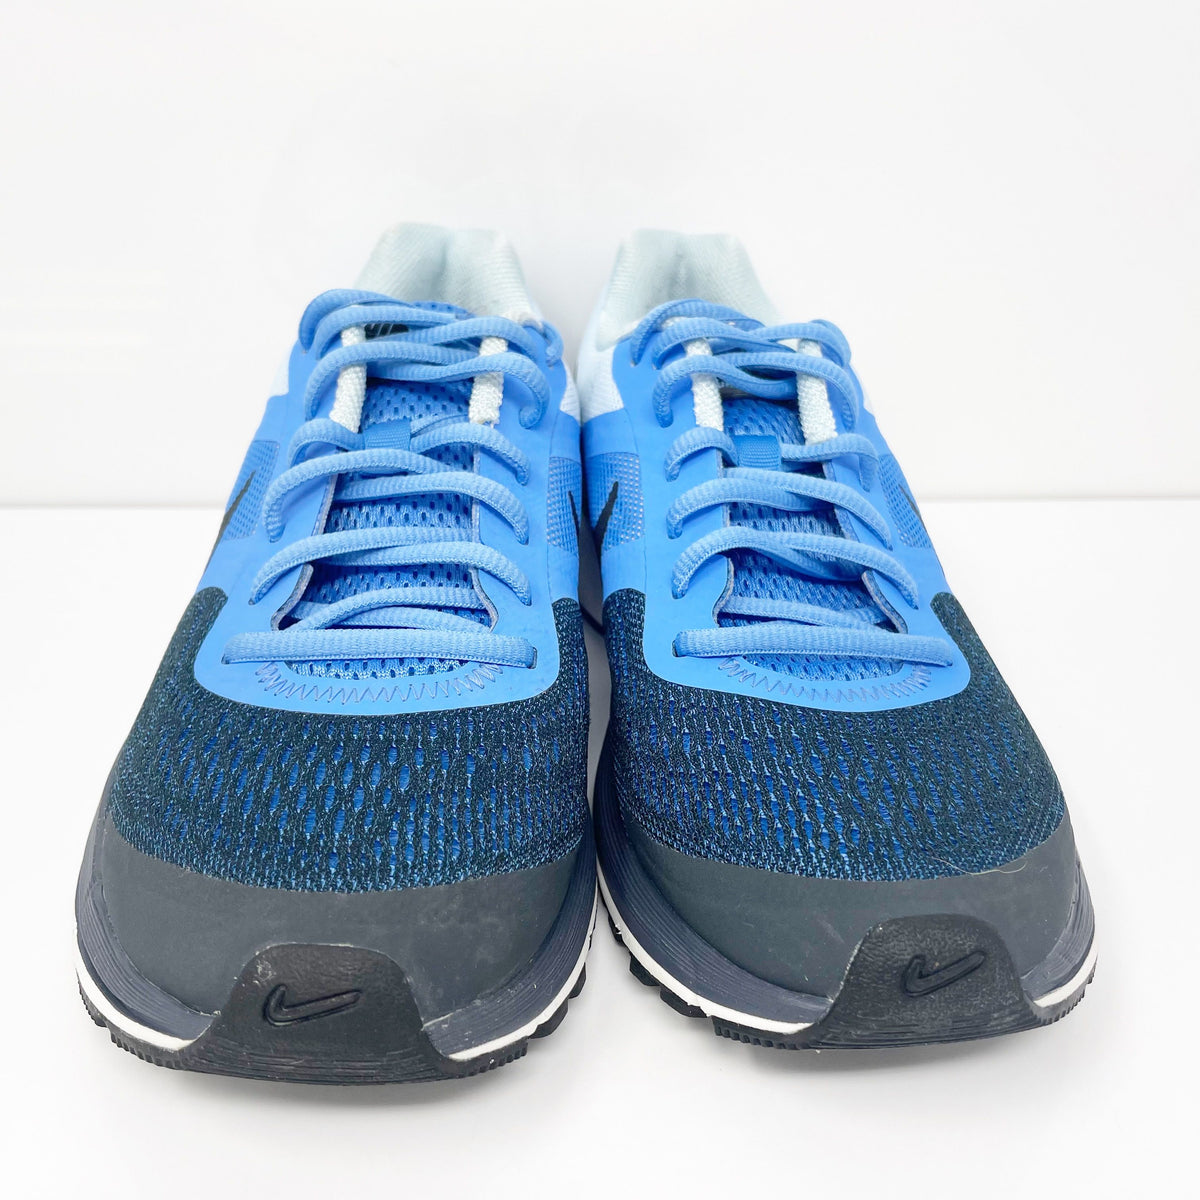 Nike Womens Air Pegasus Plus 30 599392-400 Blue Running Shoes Sneakers ...